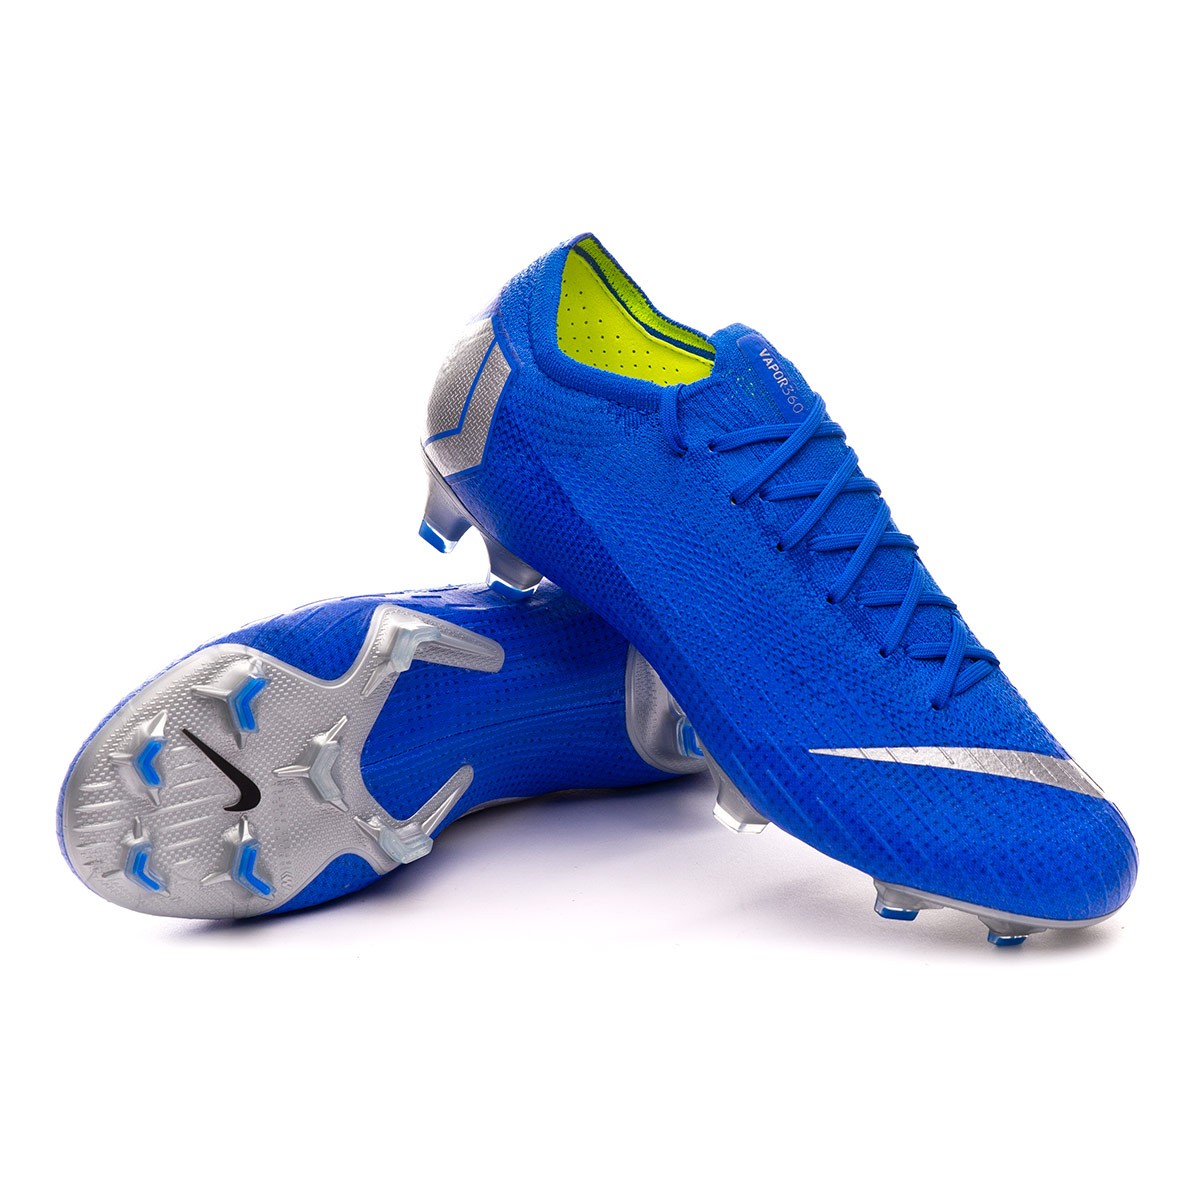 Bota de fútbol Nike Mercurial Vapor XII Elite FG Racer blue-Matallic  silver-Black - Tienda de fútbol Fútbol Emotion